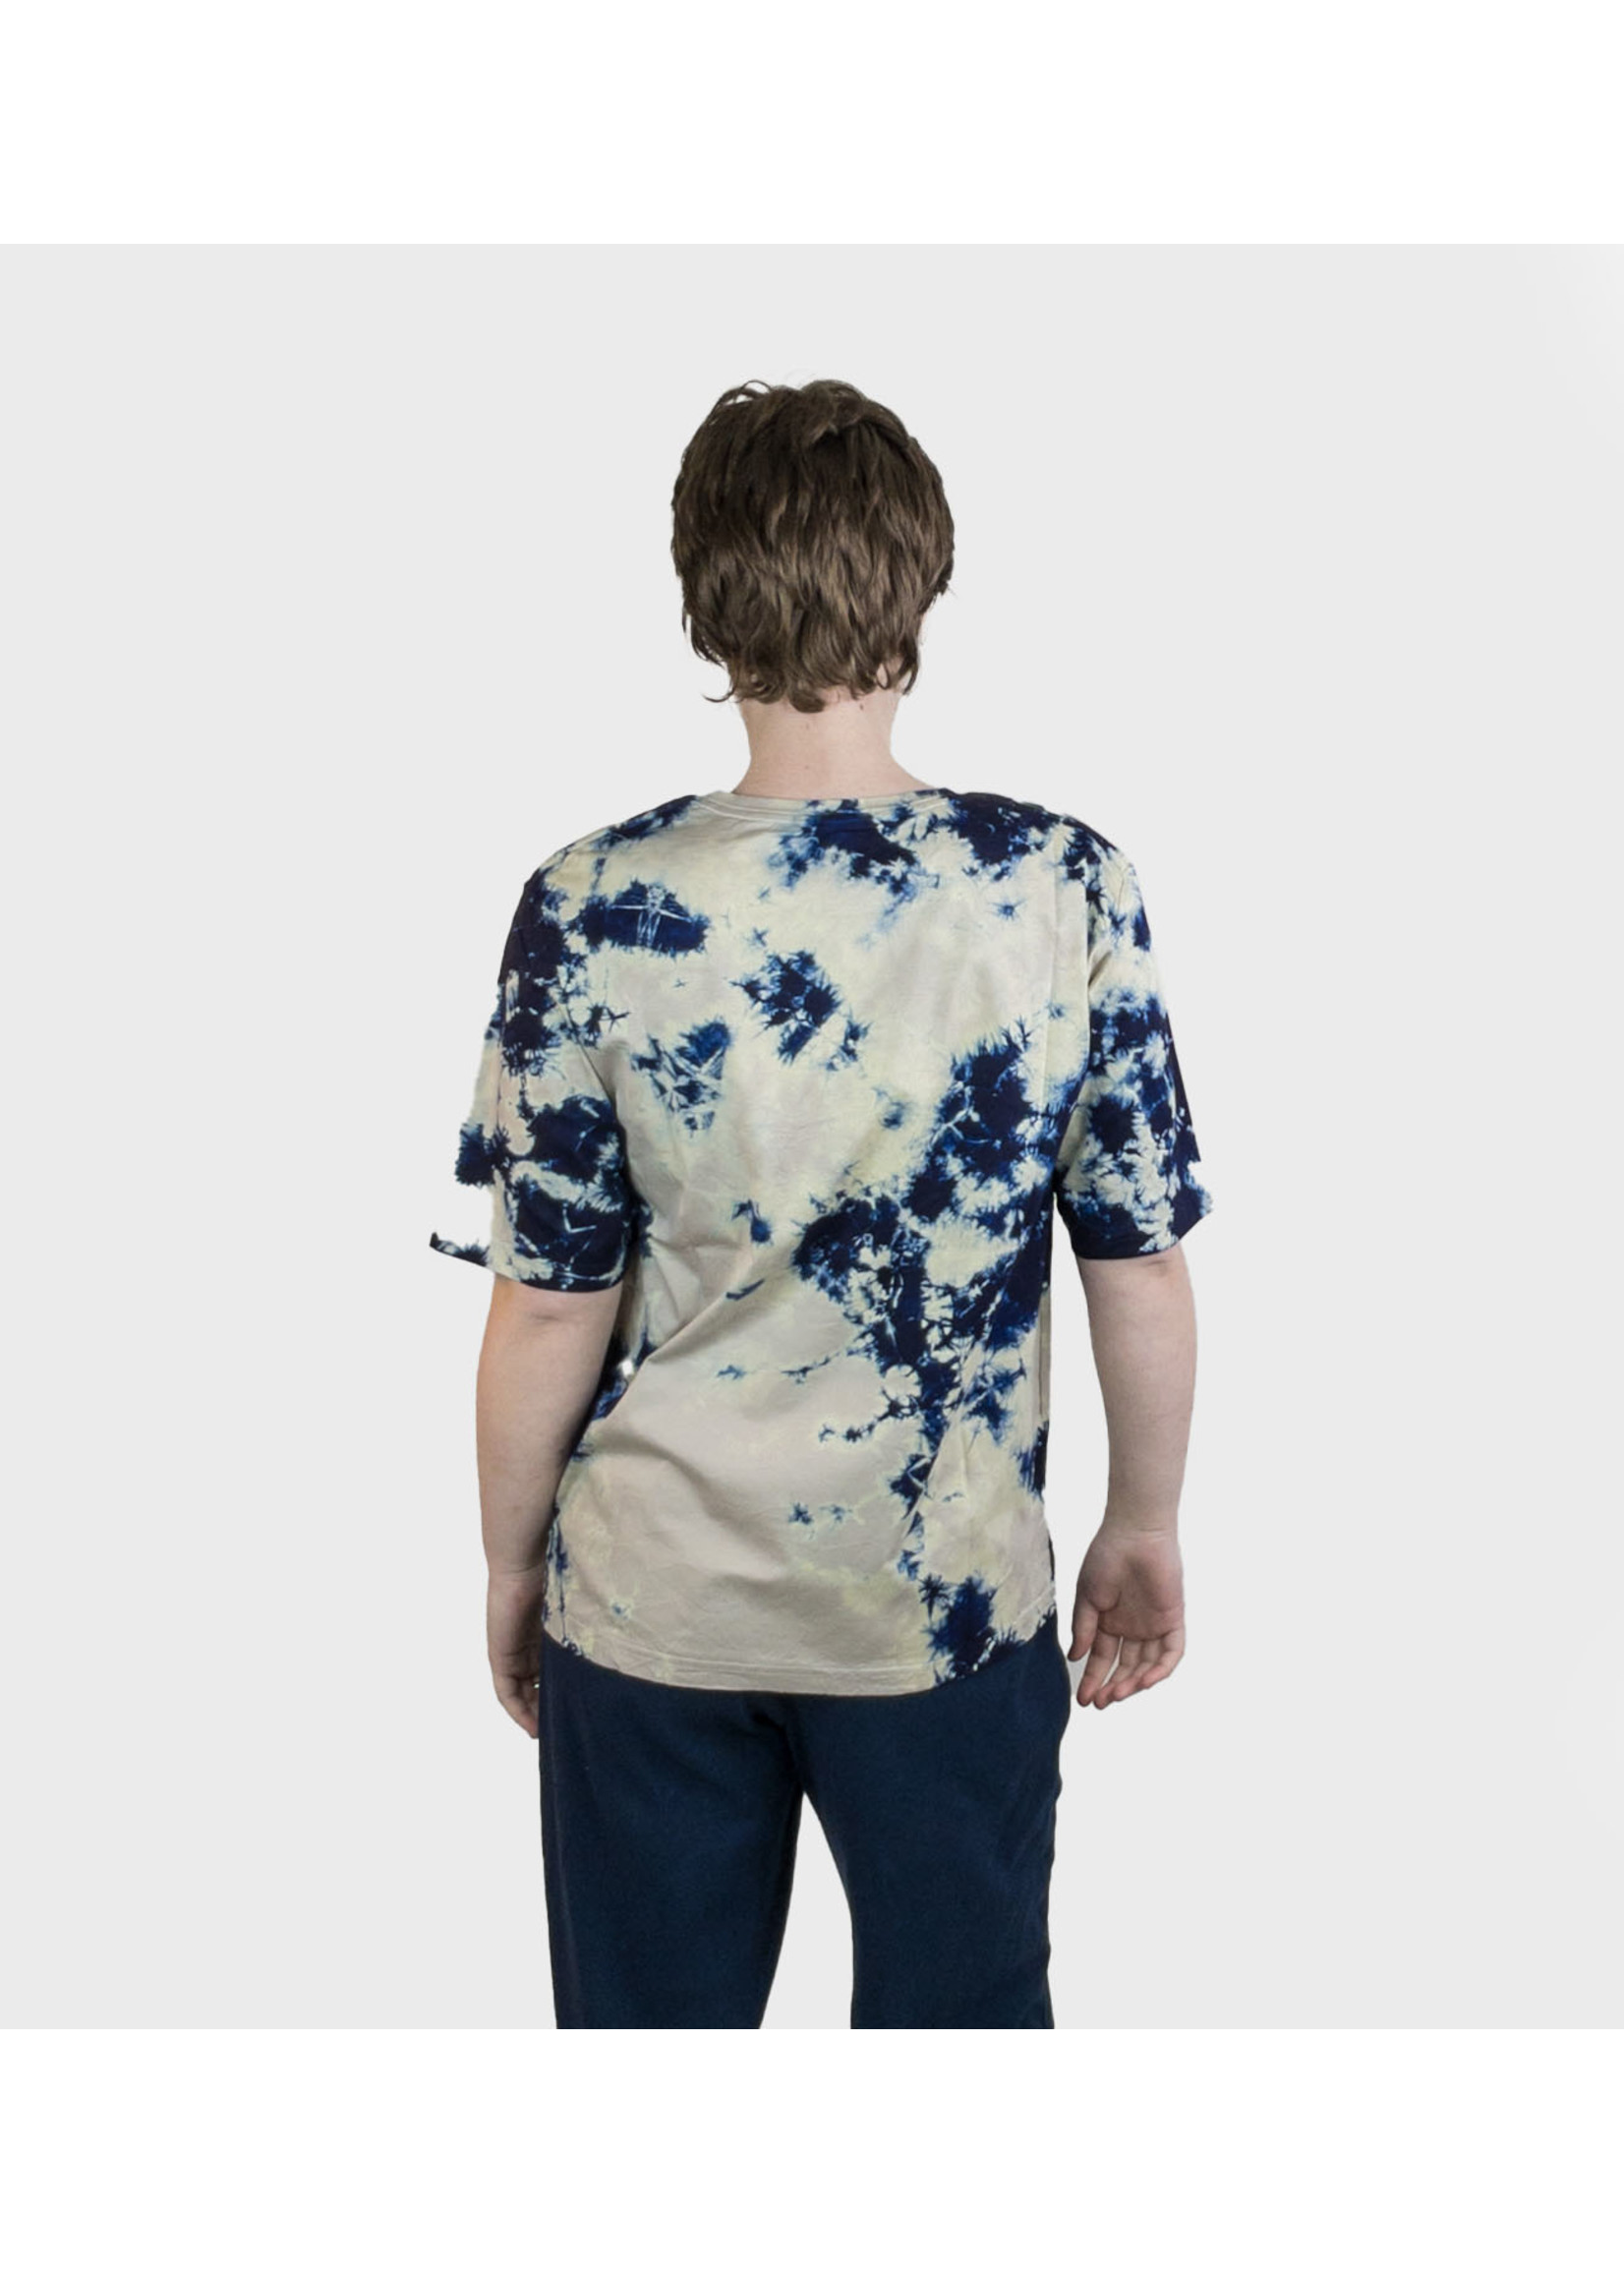 SUZUSAN Silky Cotton T-Shirt - Elbow Length Sleeve